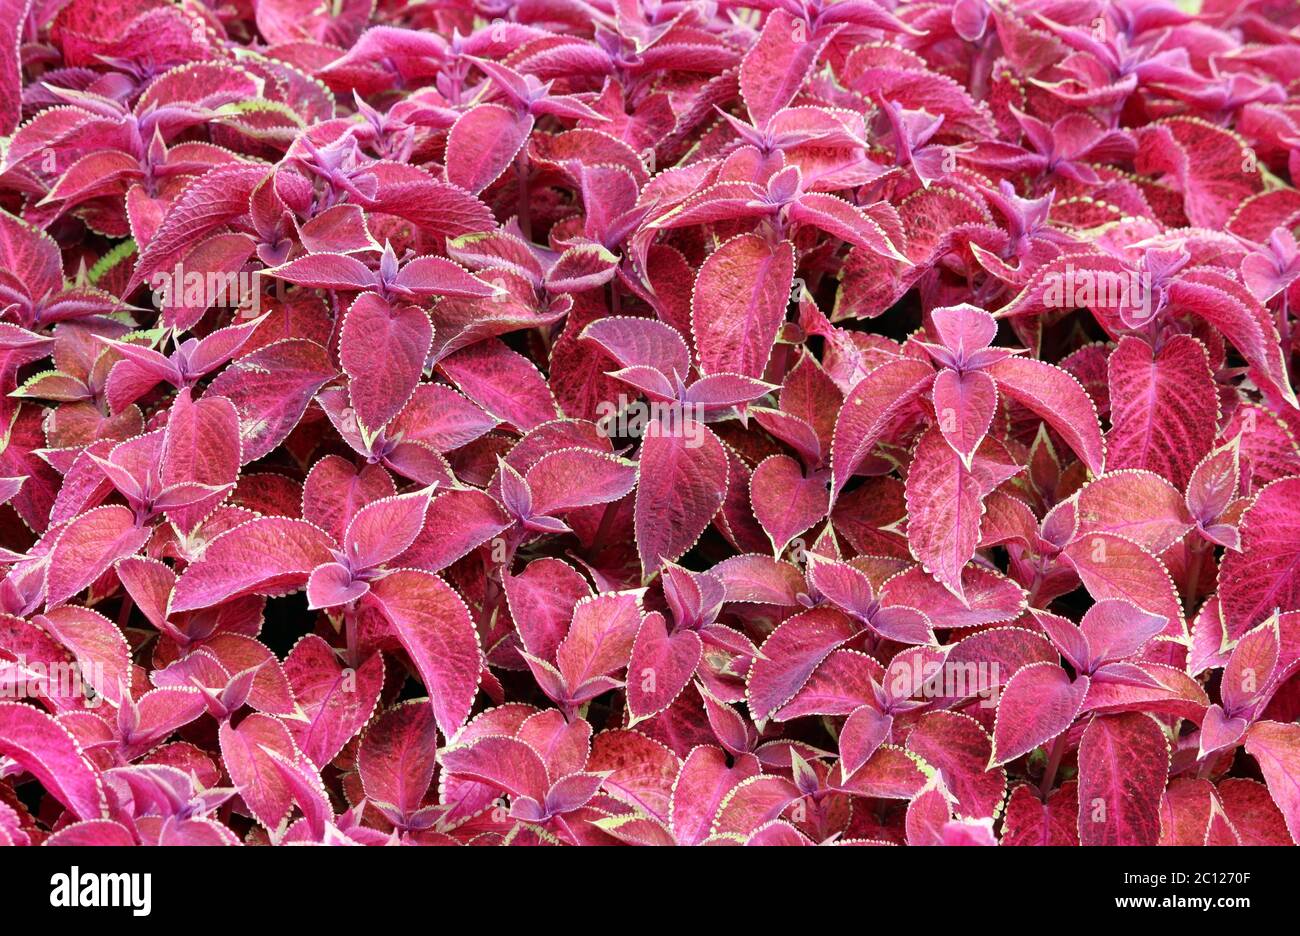 Decorative colorful leaves Plectranthus scutellarioides Coleus blumeii Stock Photo